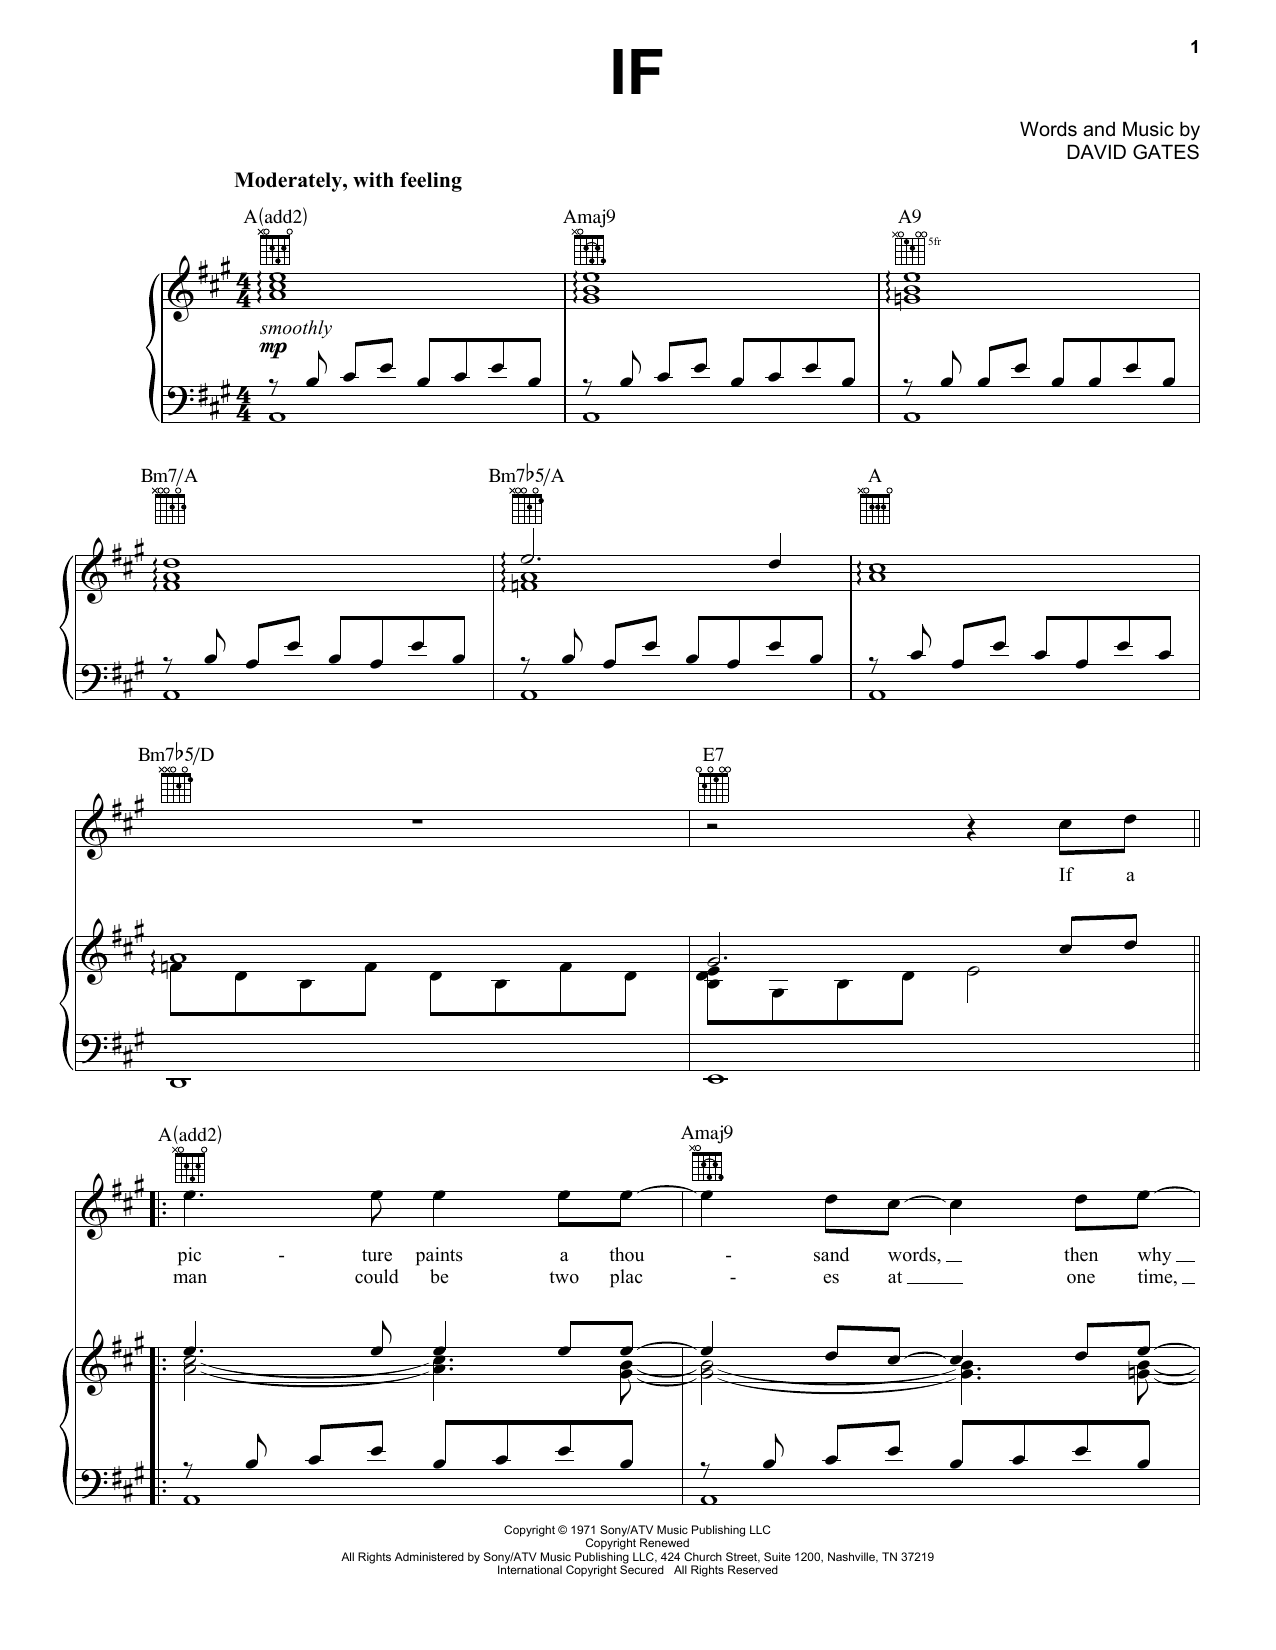 Bread If sheet music notes printable PDF score